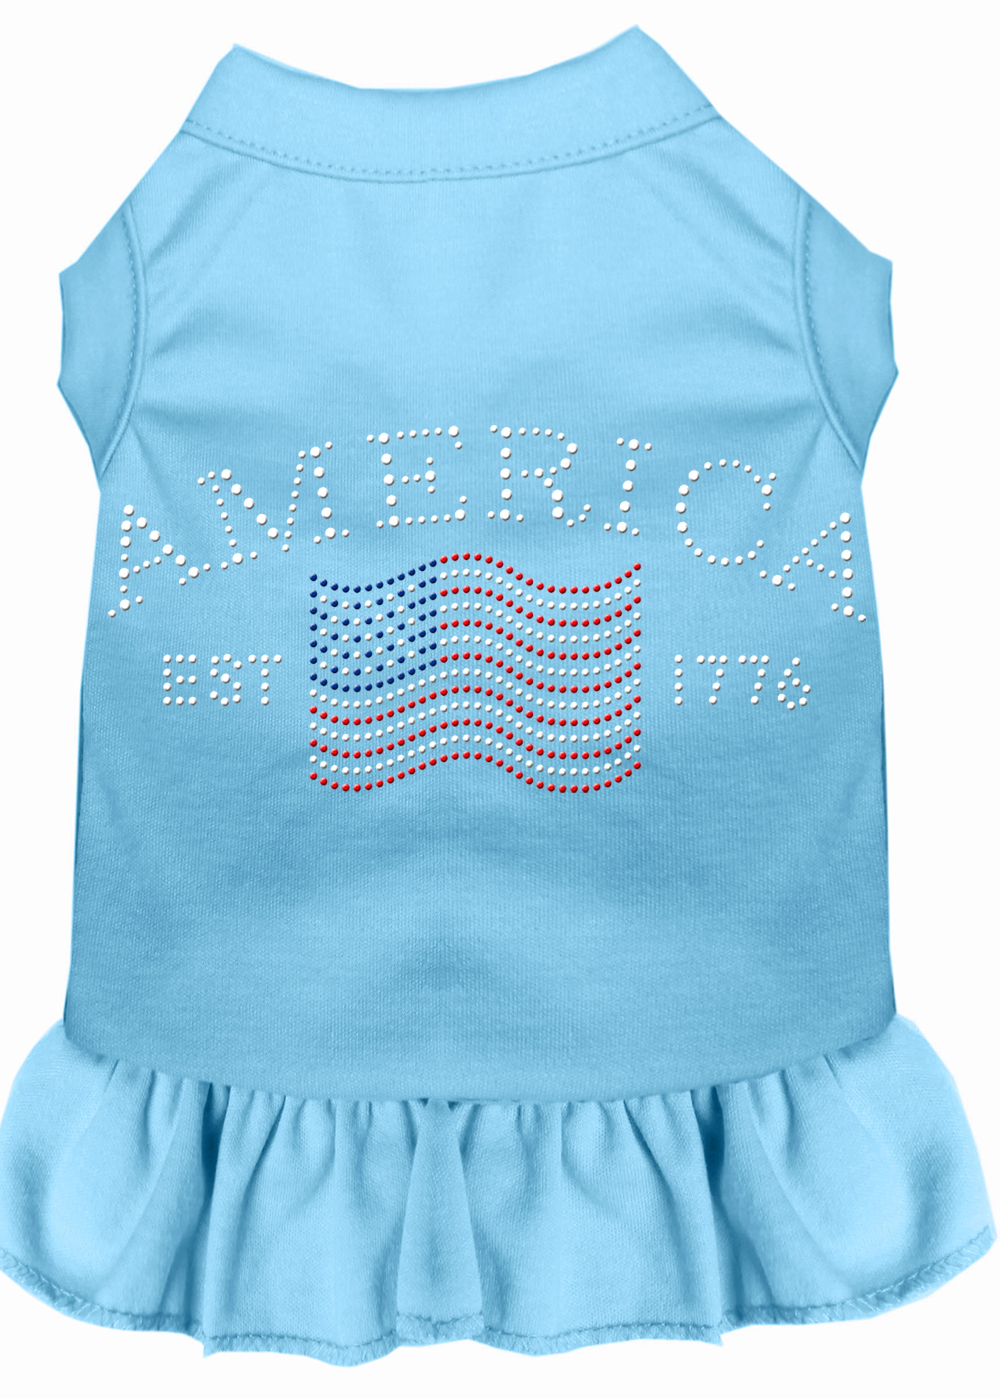 Classic America Rhinestone Dress Baby Blue Lg